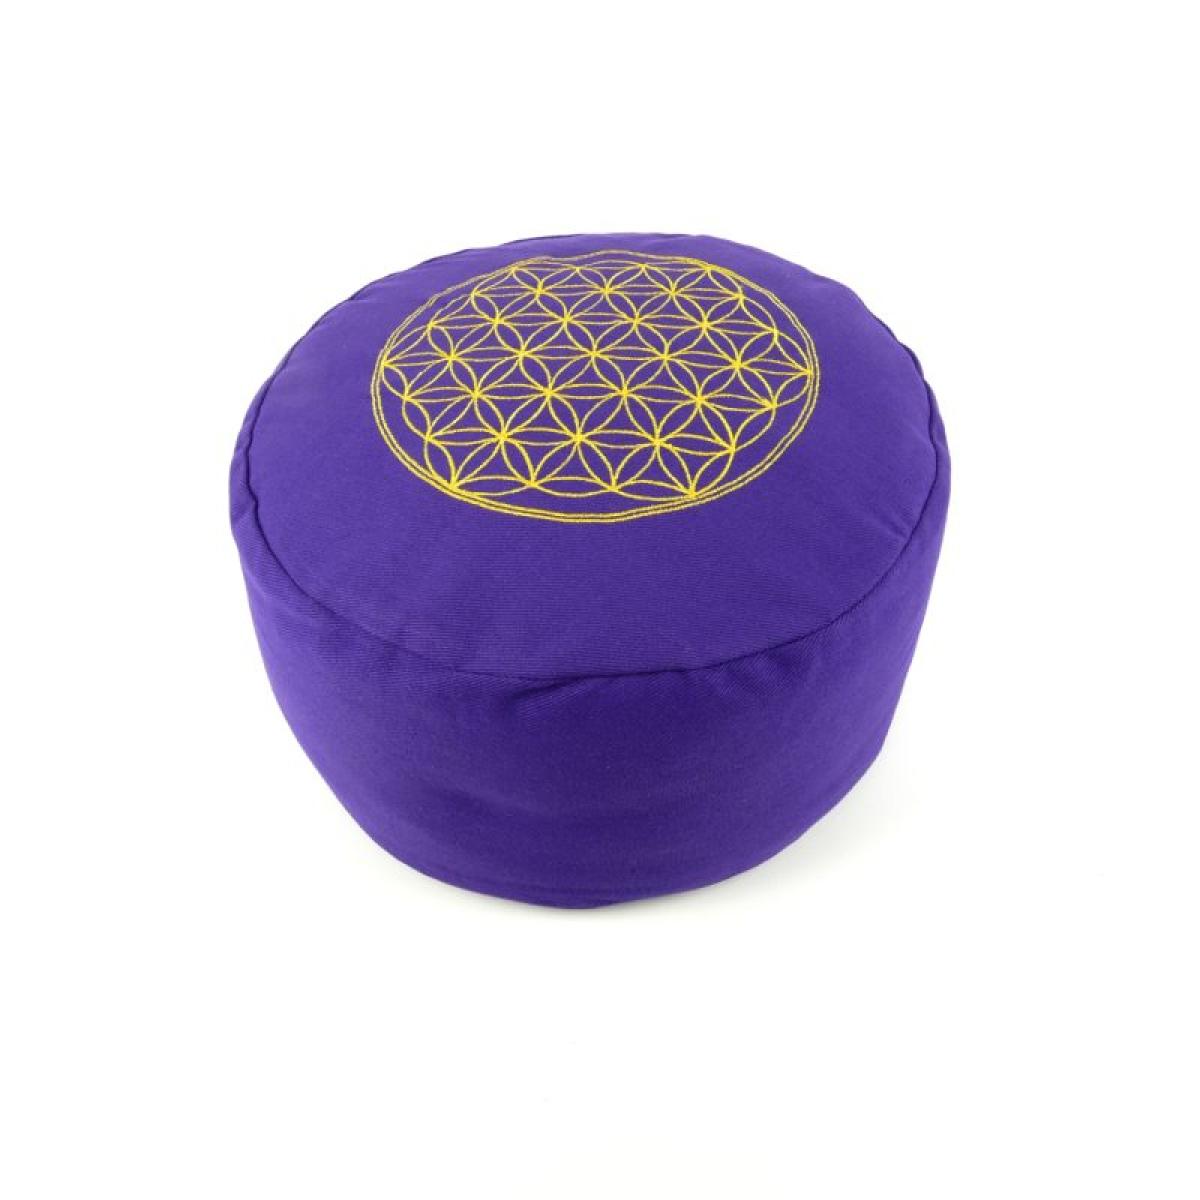 Meditation cushion flower of life - purple ► www.bokken-shop.de ✅ yoga cushion ✔ meditation ✔ flower of life ✔ your meditation specialist!